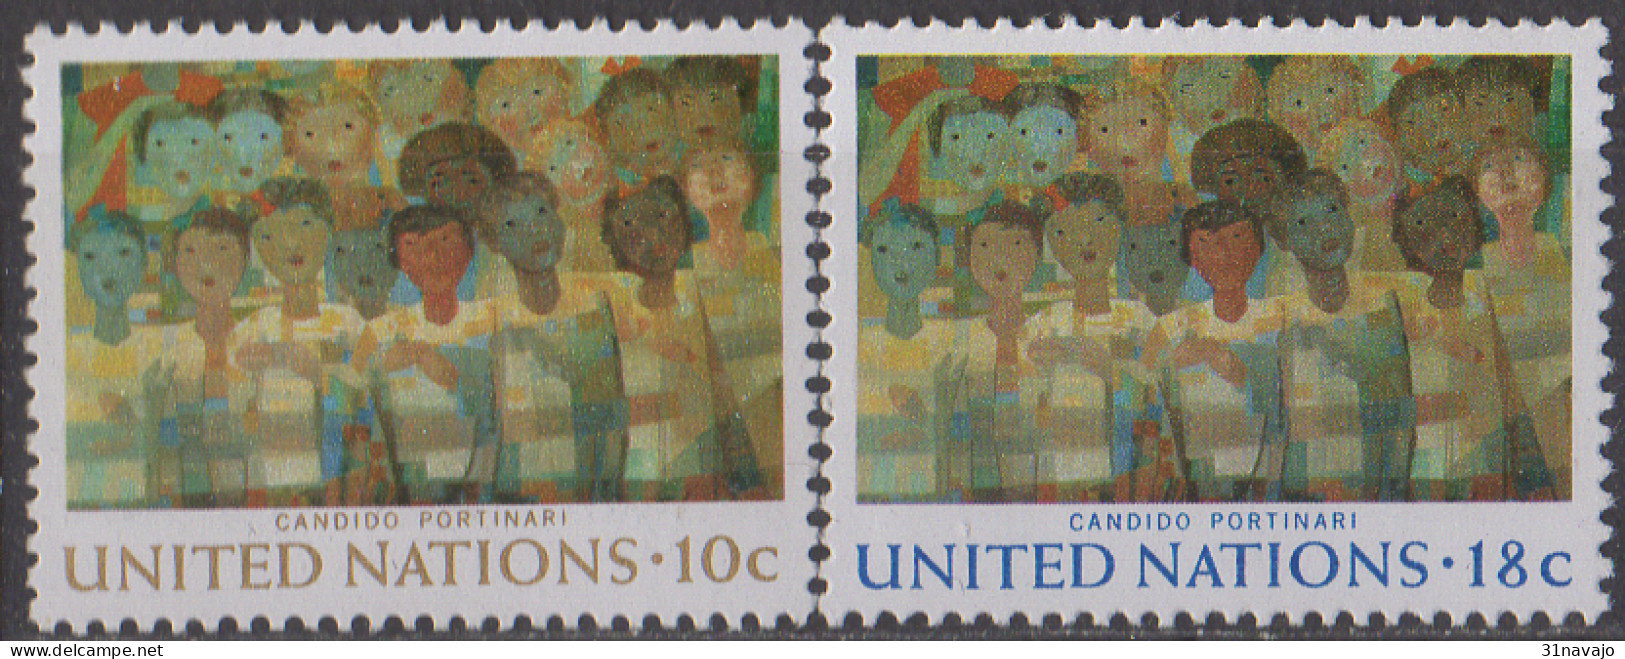 NATIONS UNIES (New York) - L'art Aux Nations Unies 1974 - Ongebruikt